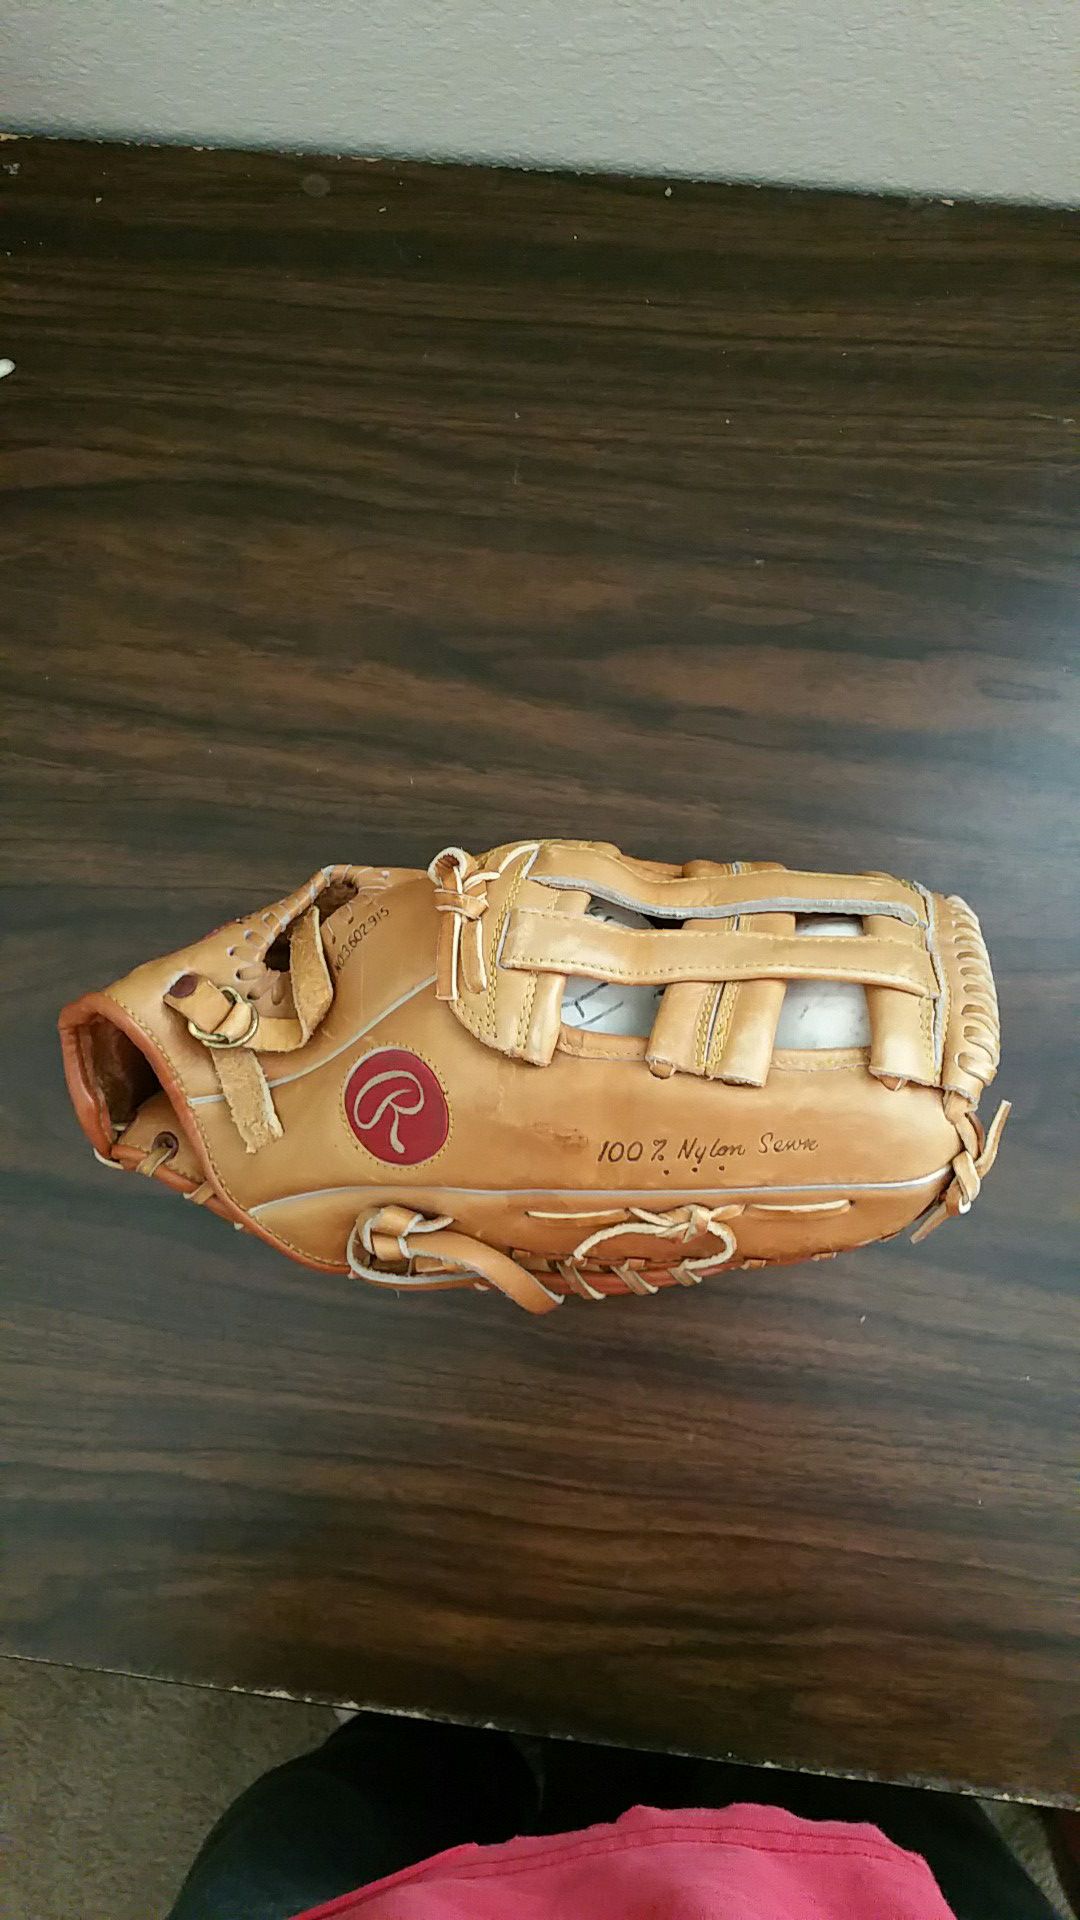 Rawlings Softball glove